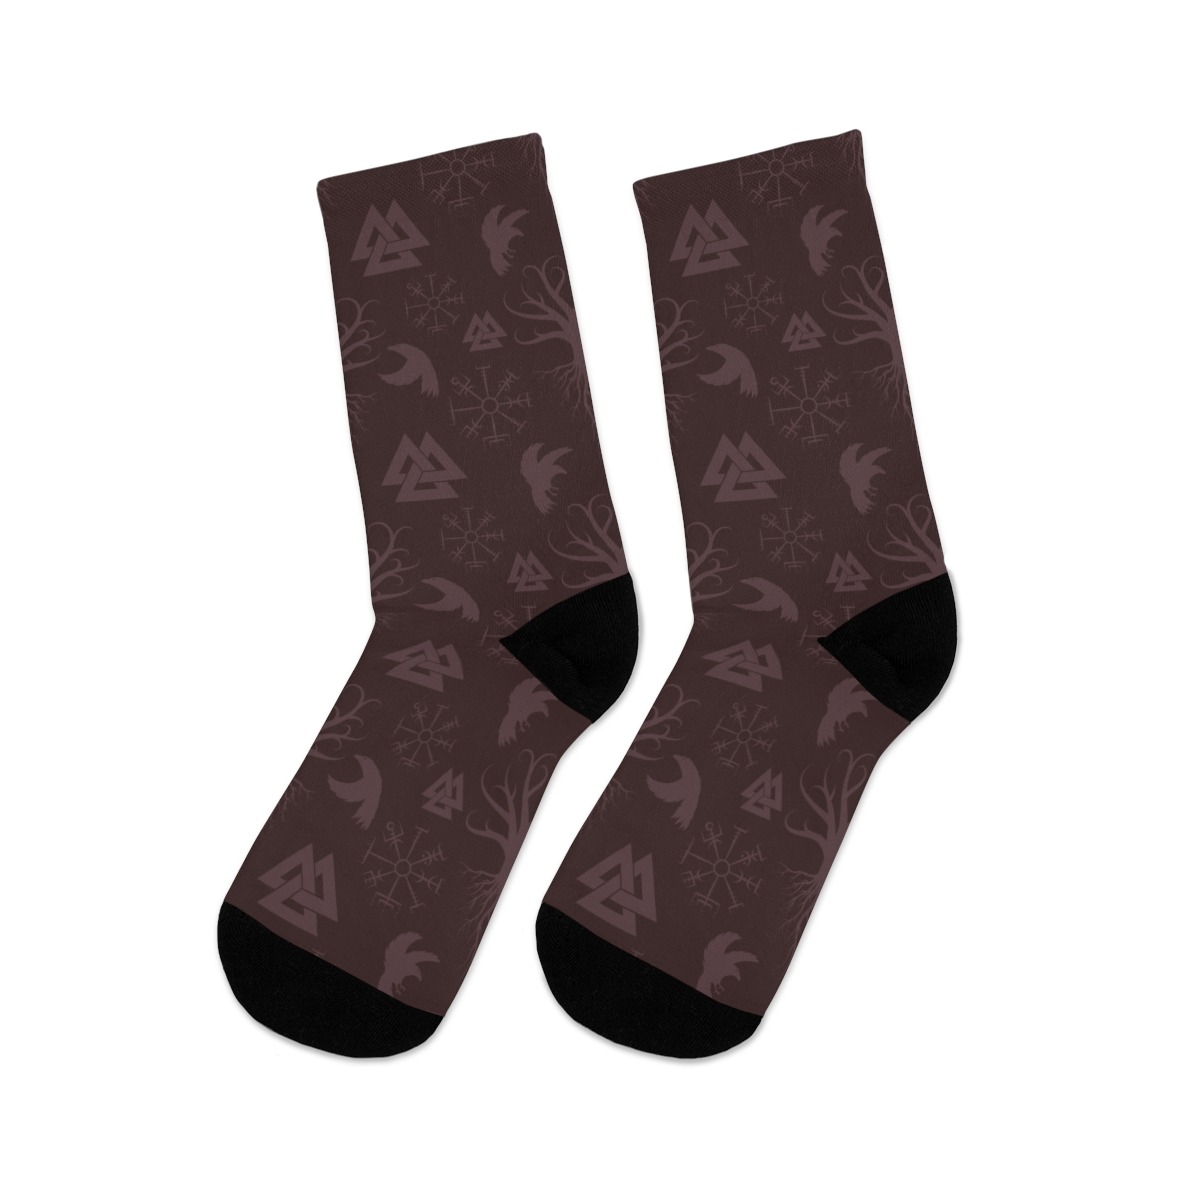 Maroon Norse Symbols Socks